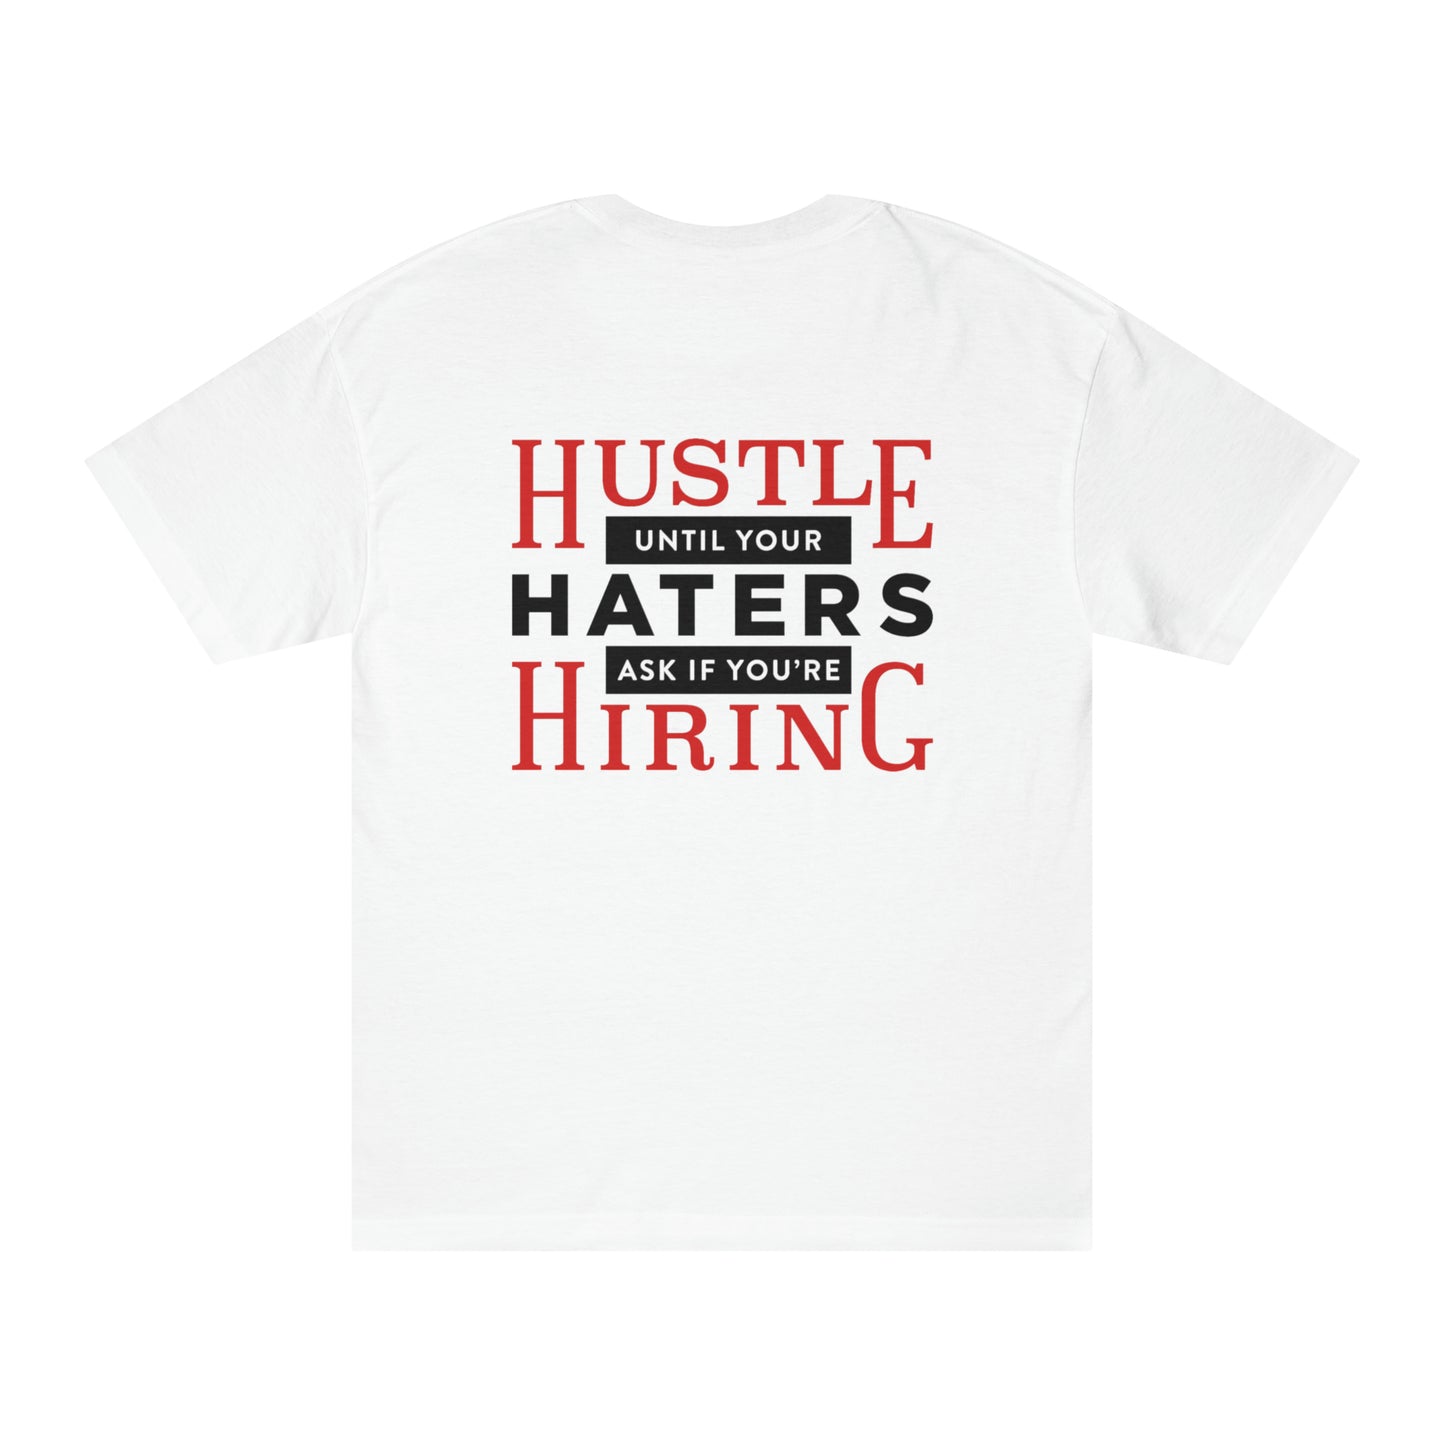 Hustle until your Haters T-Shirt